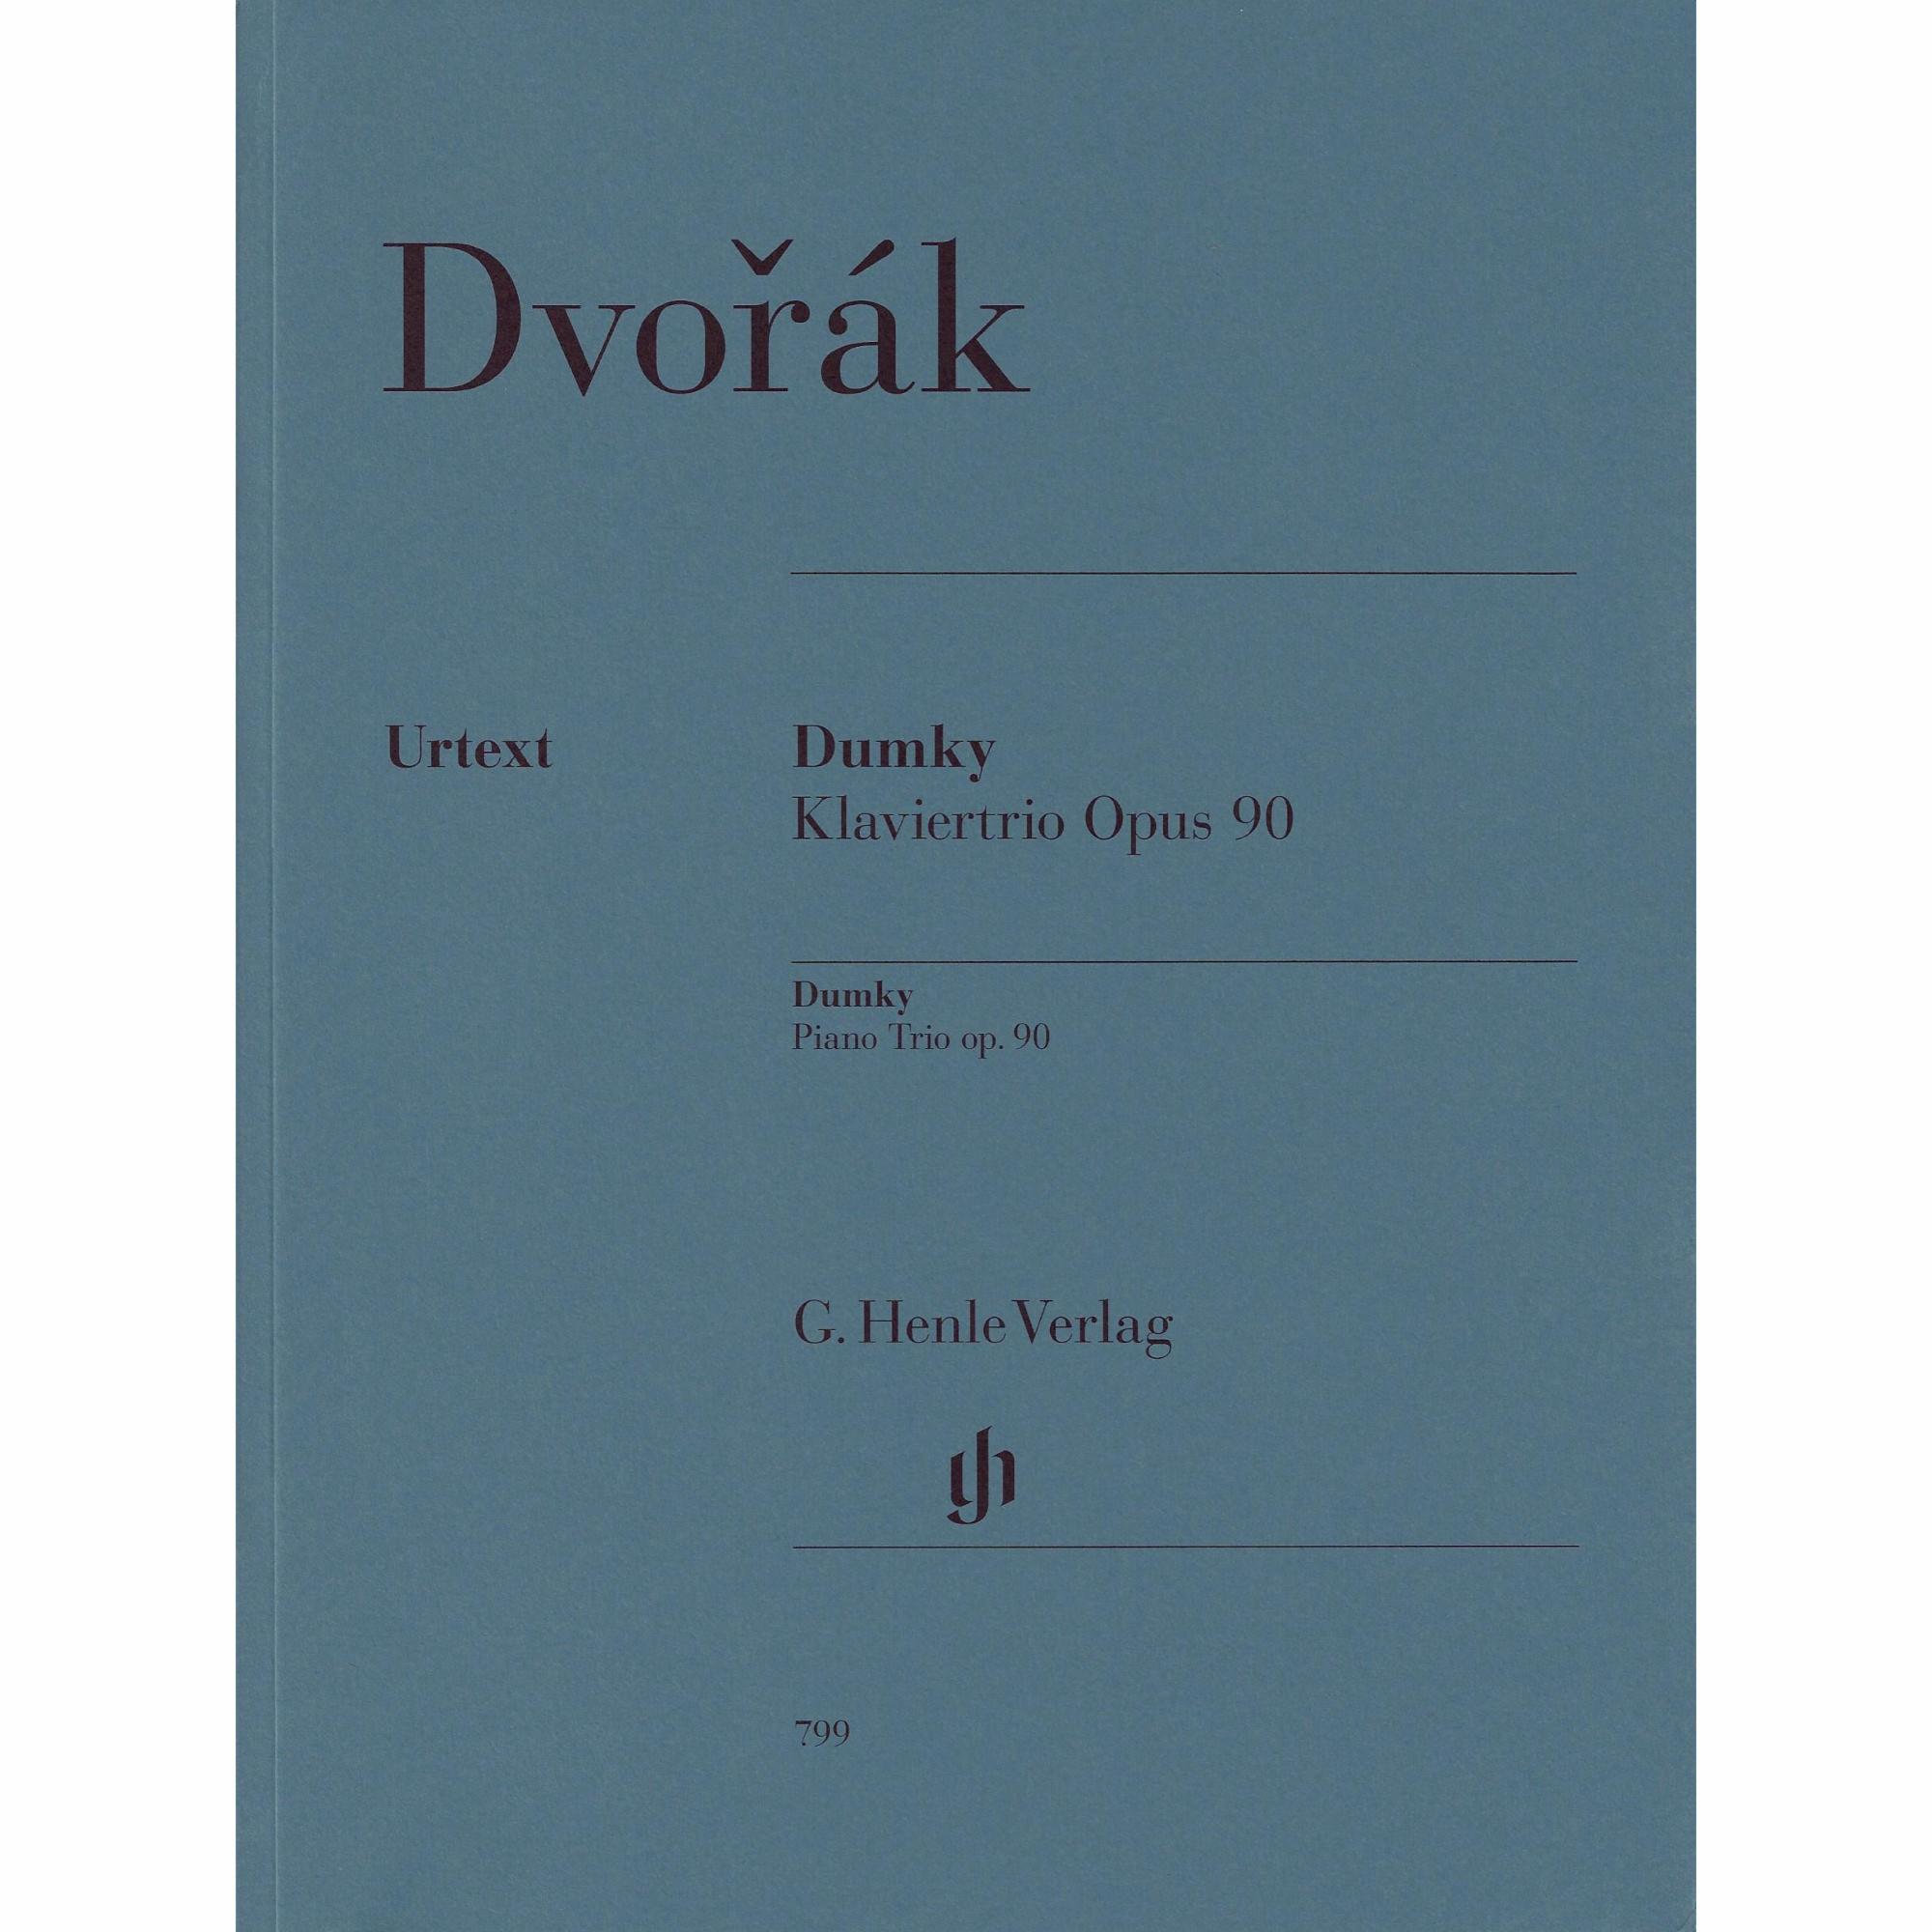 Dvorak -- Piano Trio, Op. 90 (Dumky)